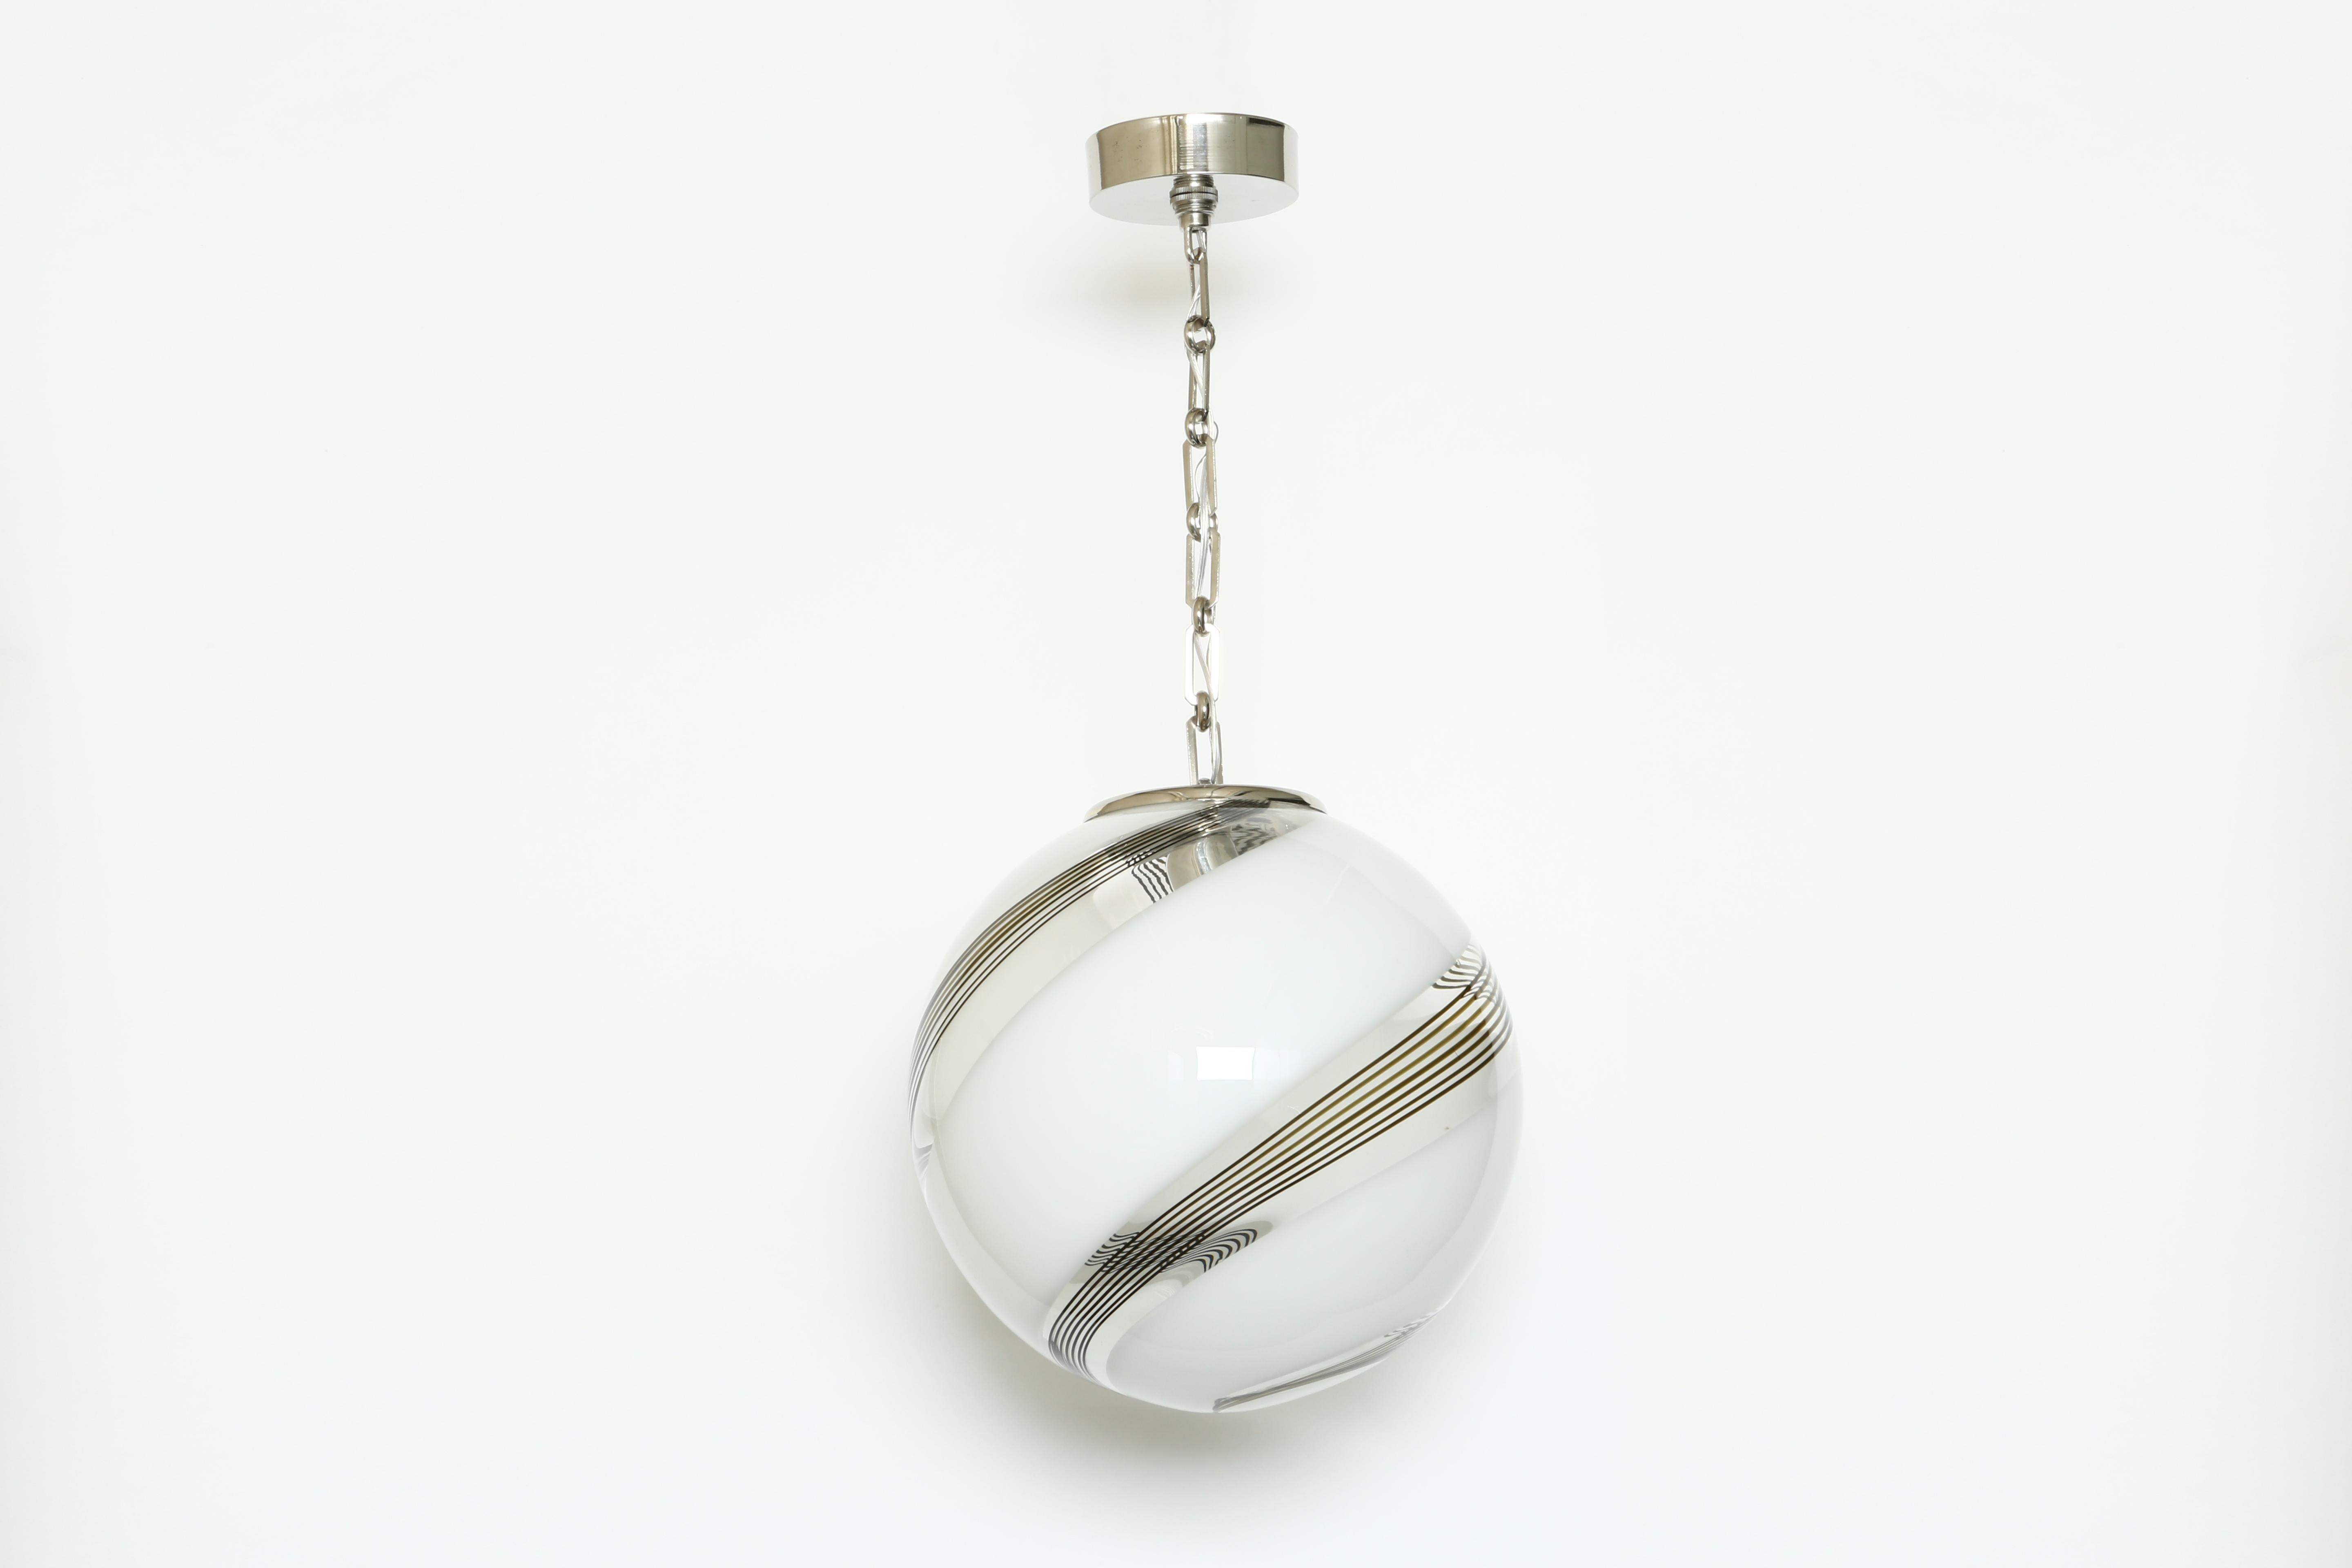 Murano glass globe ceiling pendant.
Glass, metal.
Italy, 1970s.

 